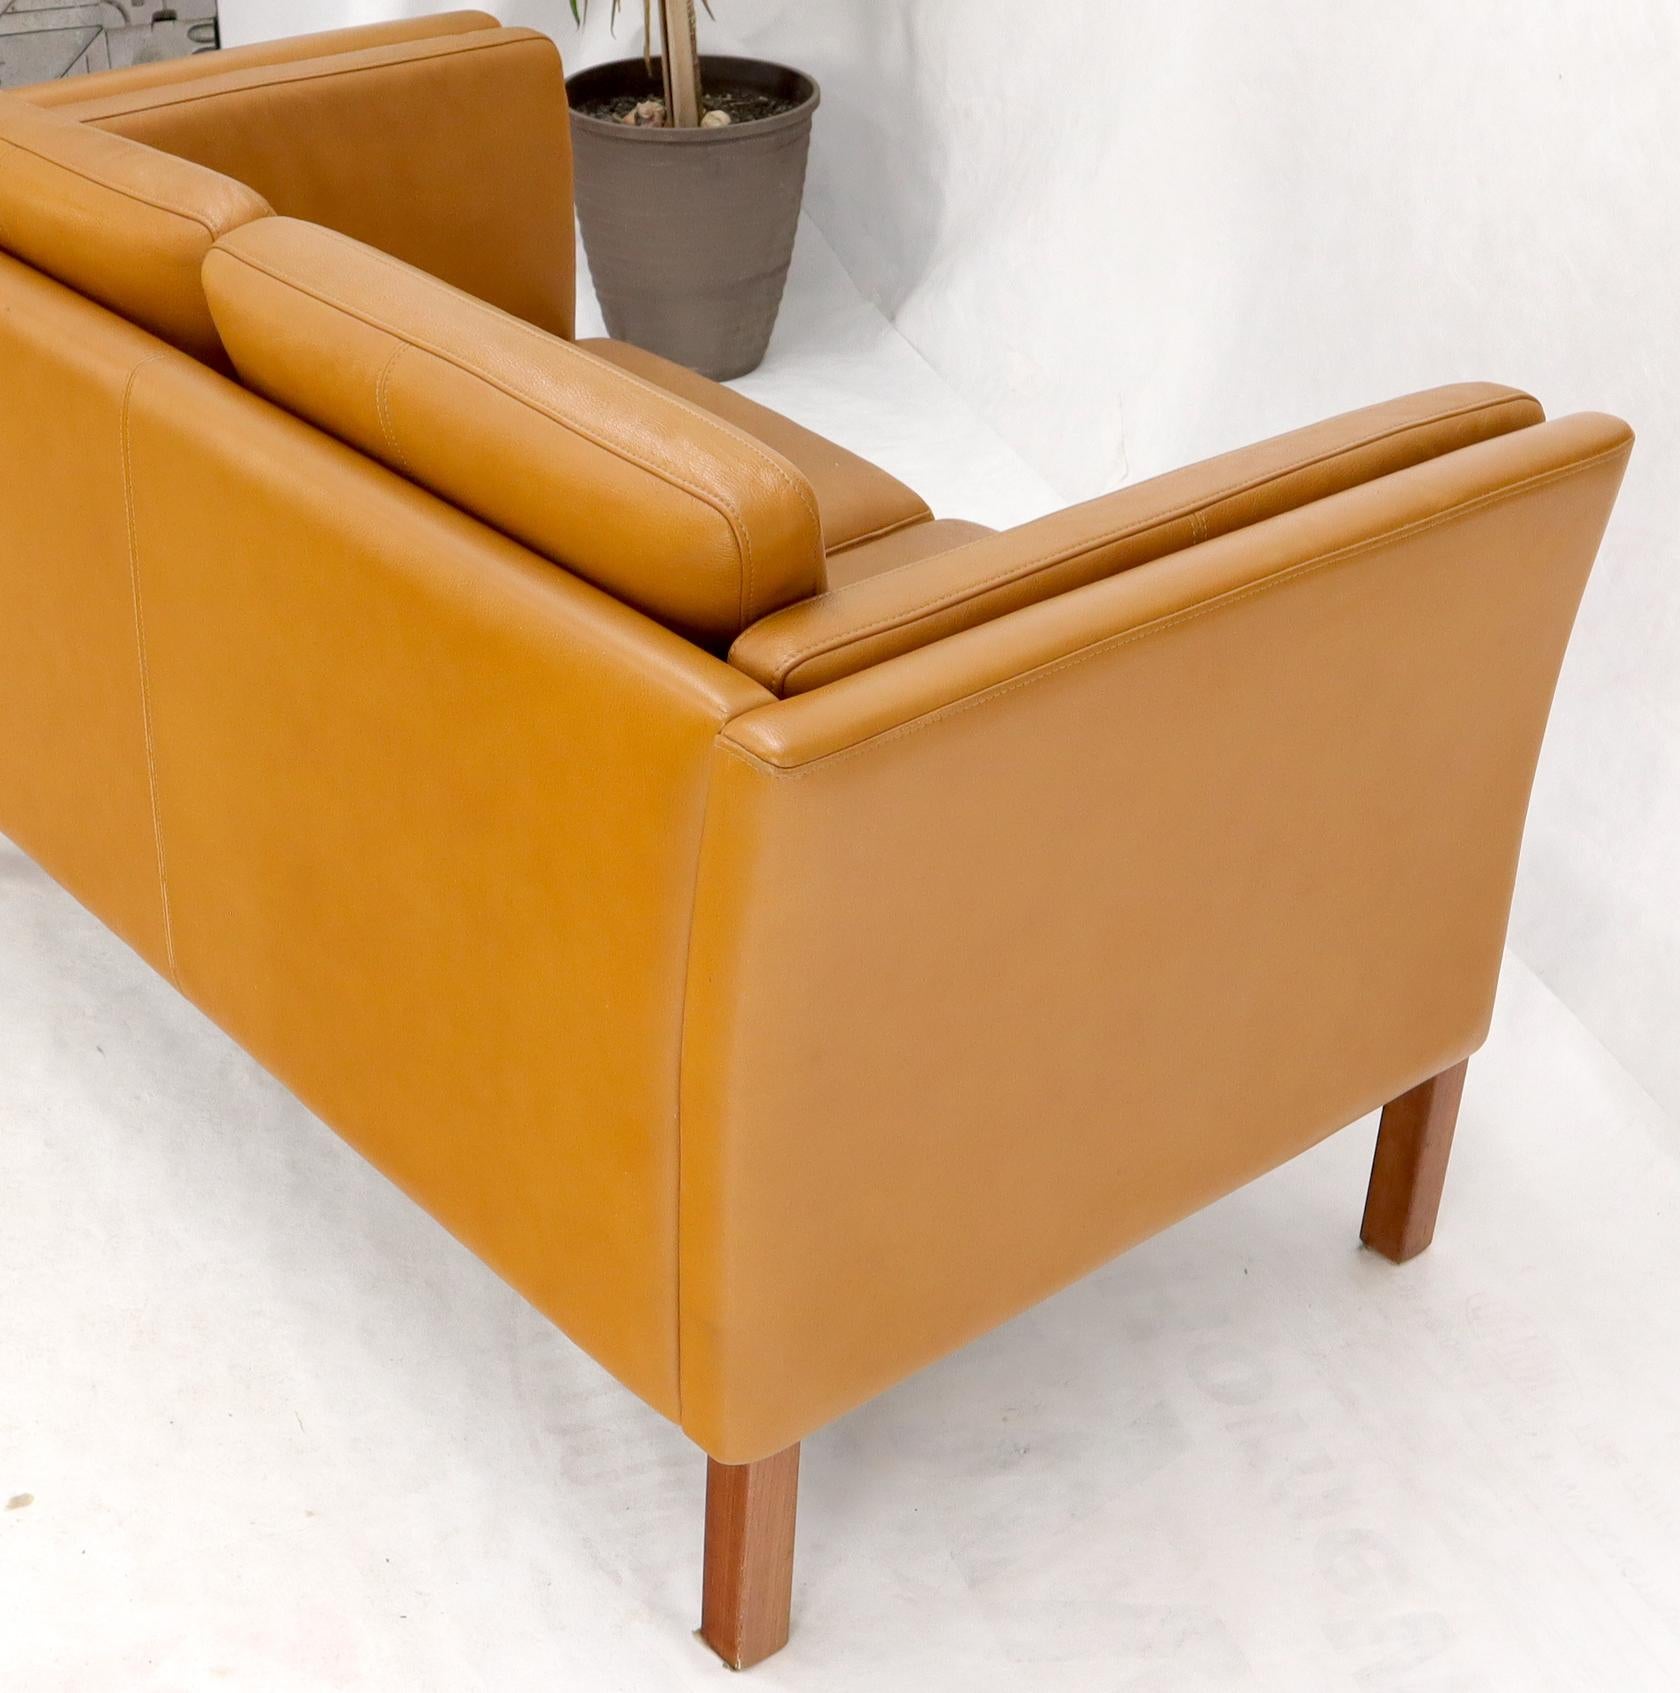 20th Century Borge Mogenson Tan Leather Loveseat Sofa Danish Mid-Century Modern For Sale